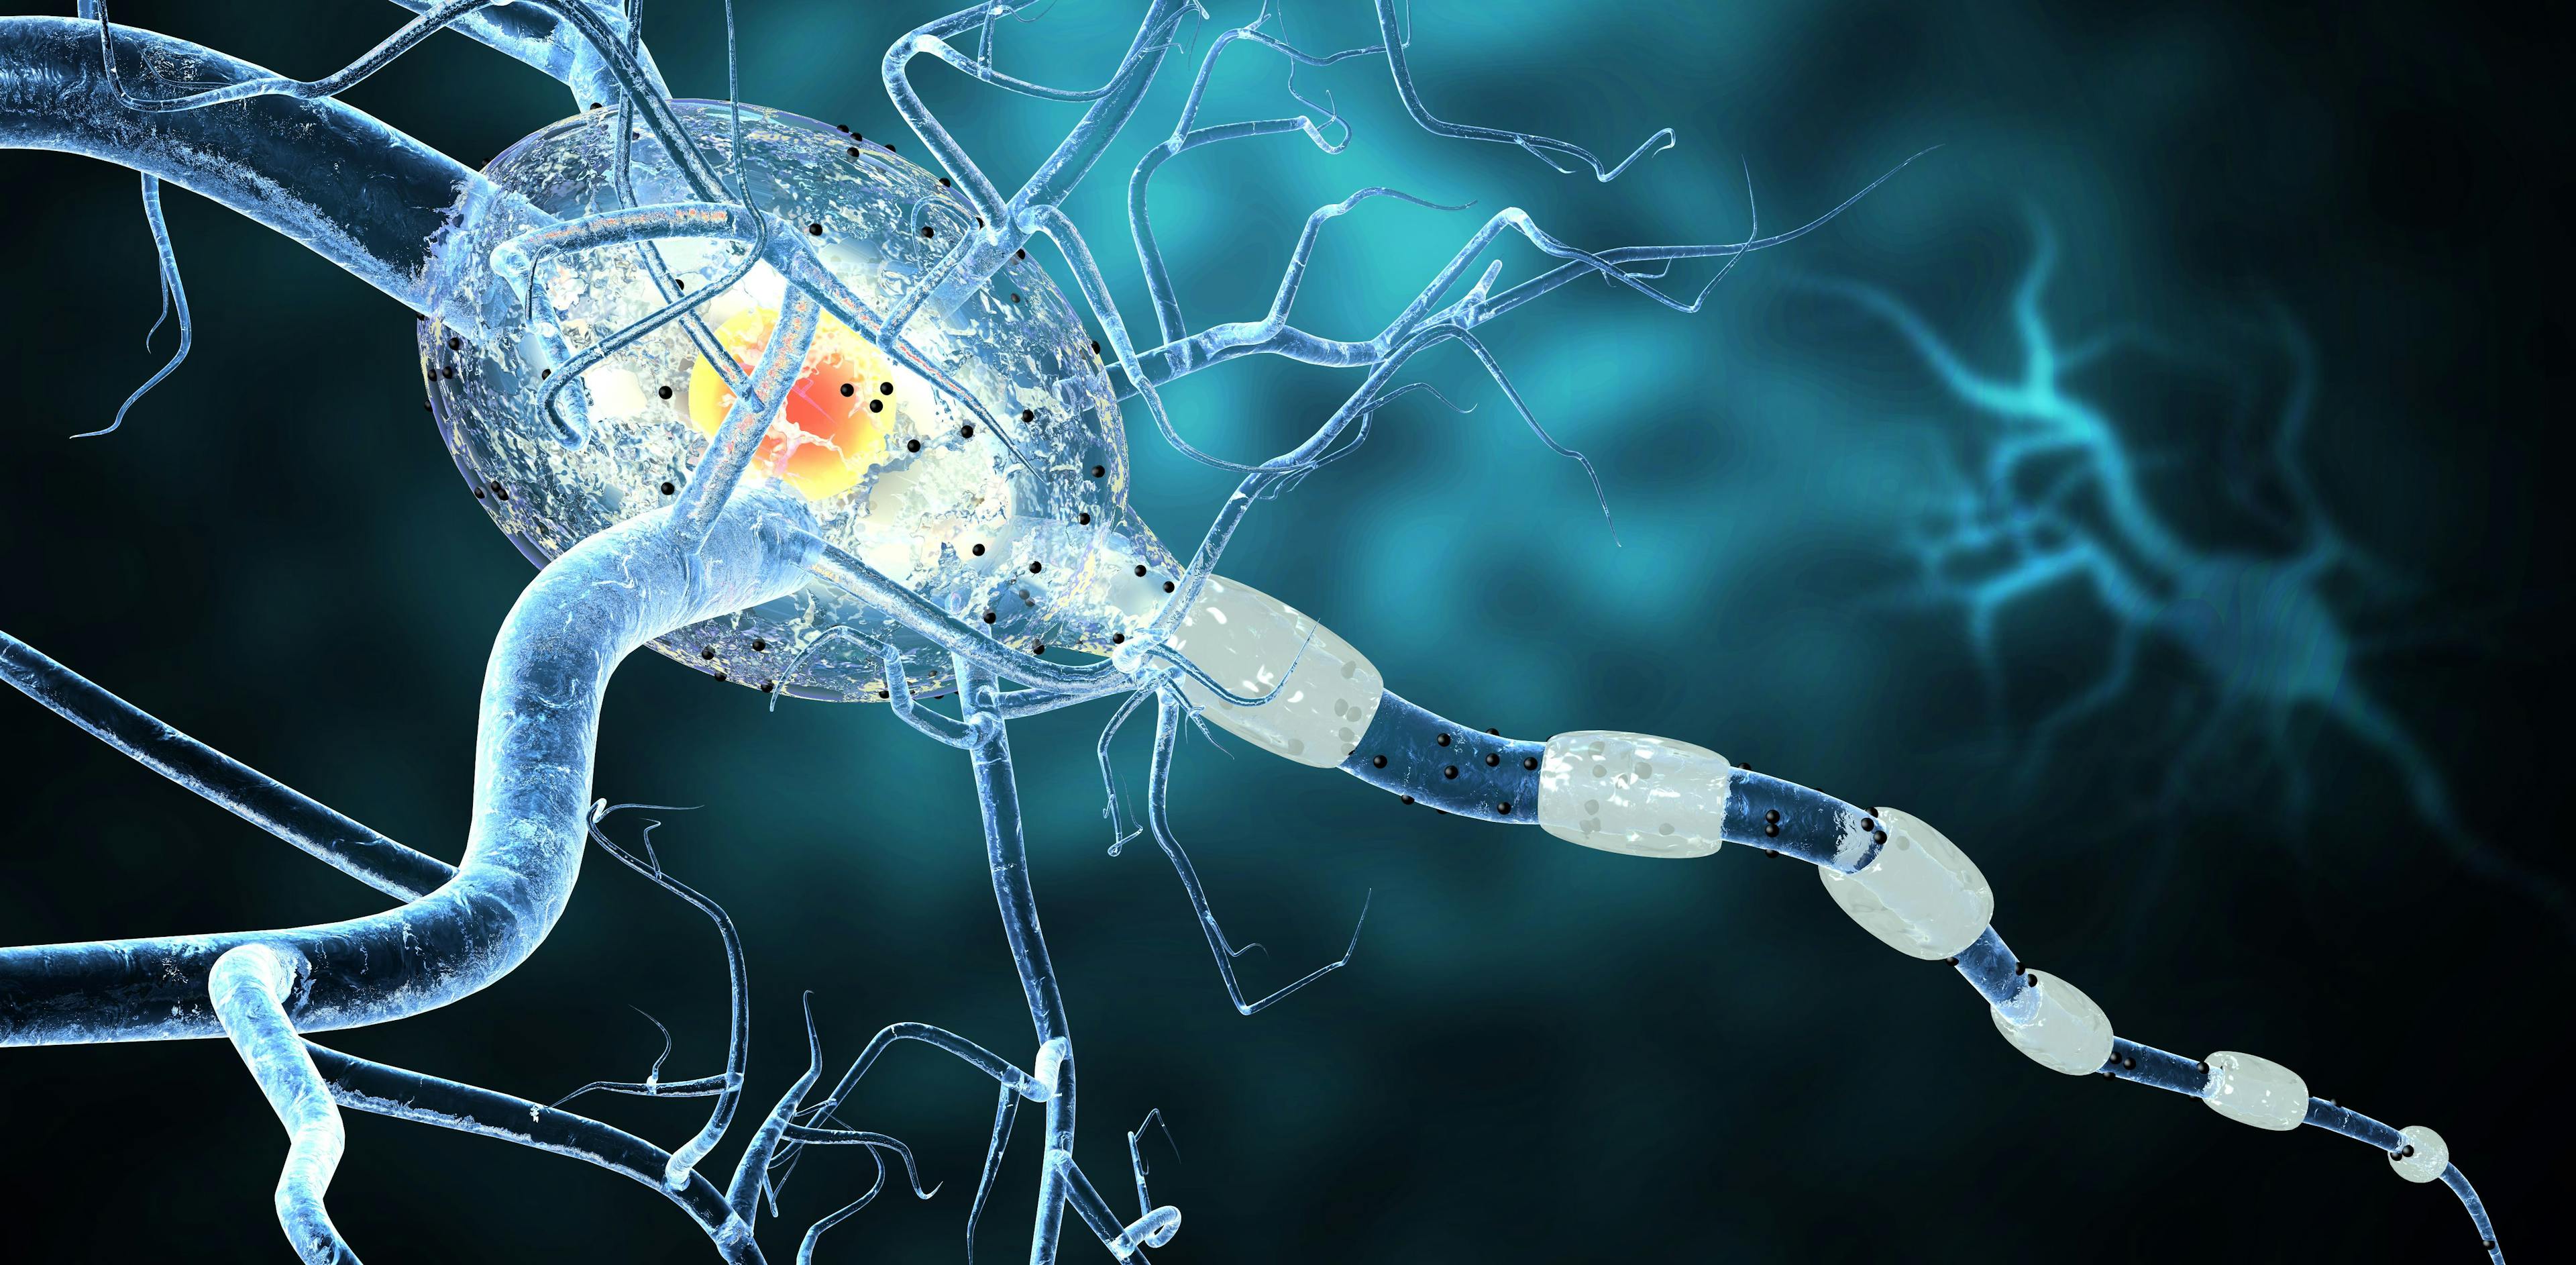 Nerve Cell MS Model | image credit: ralwel - stock.adobe.com